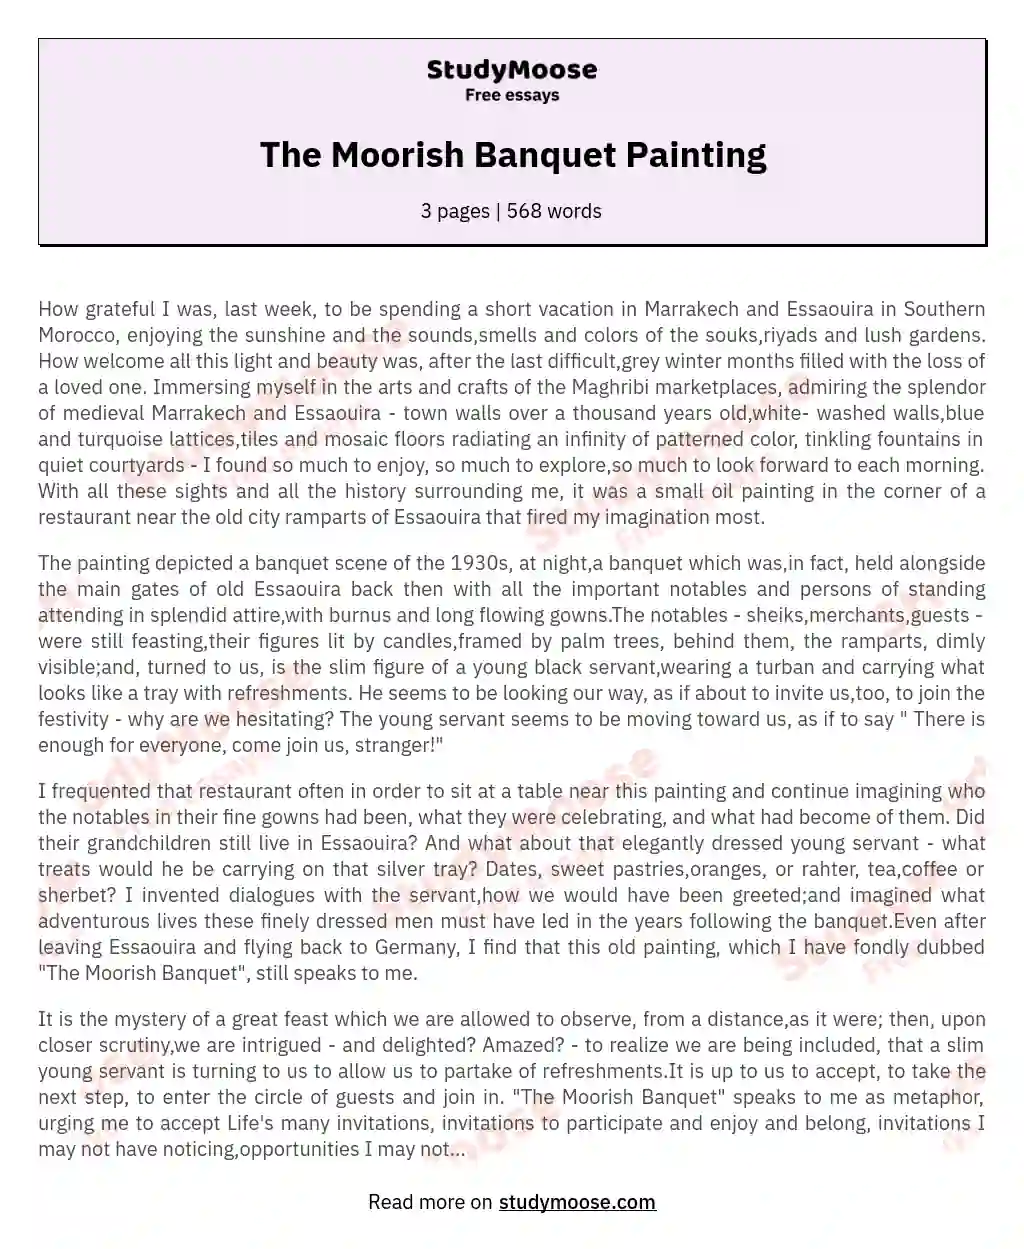 The Moorish Banquet Painting essay